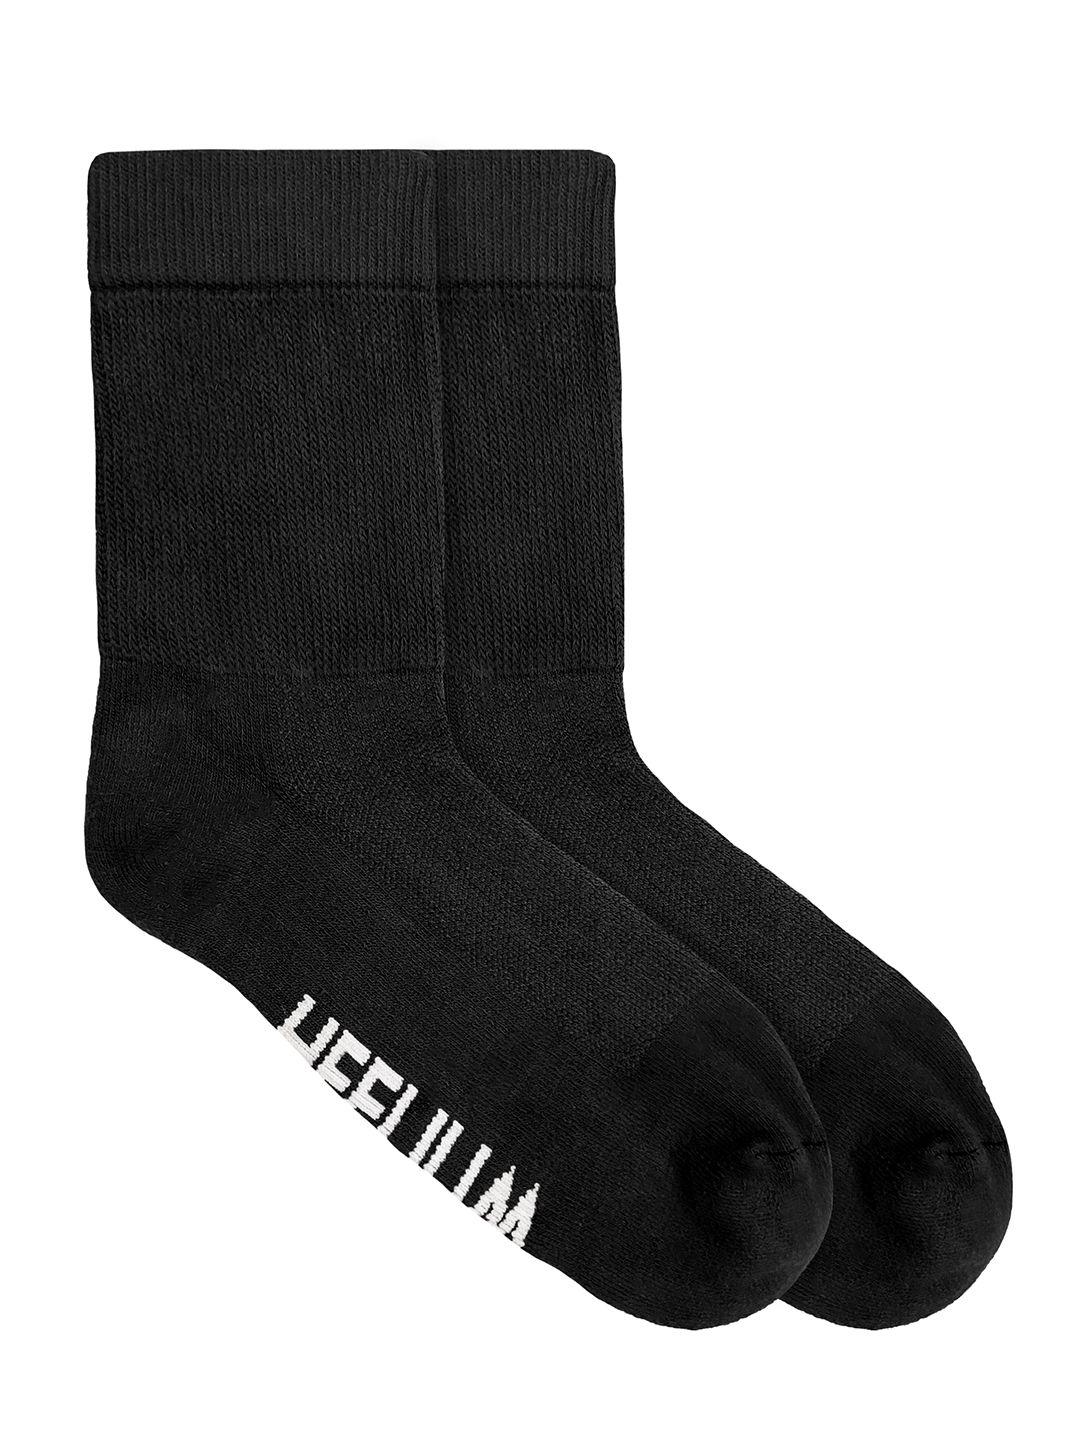 heelium unisex black pack of 2 calf length socks